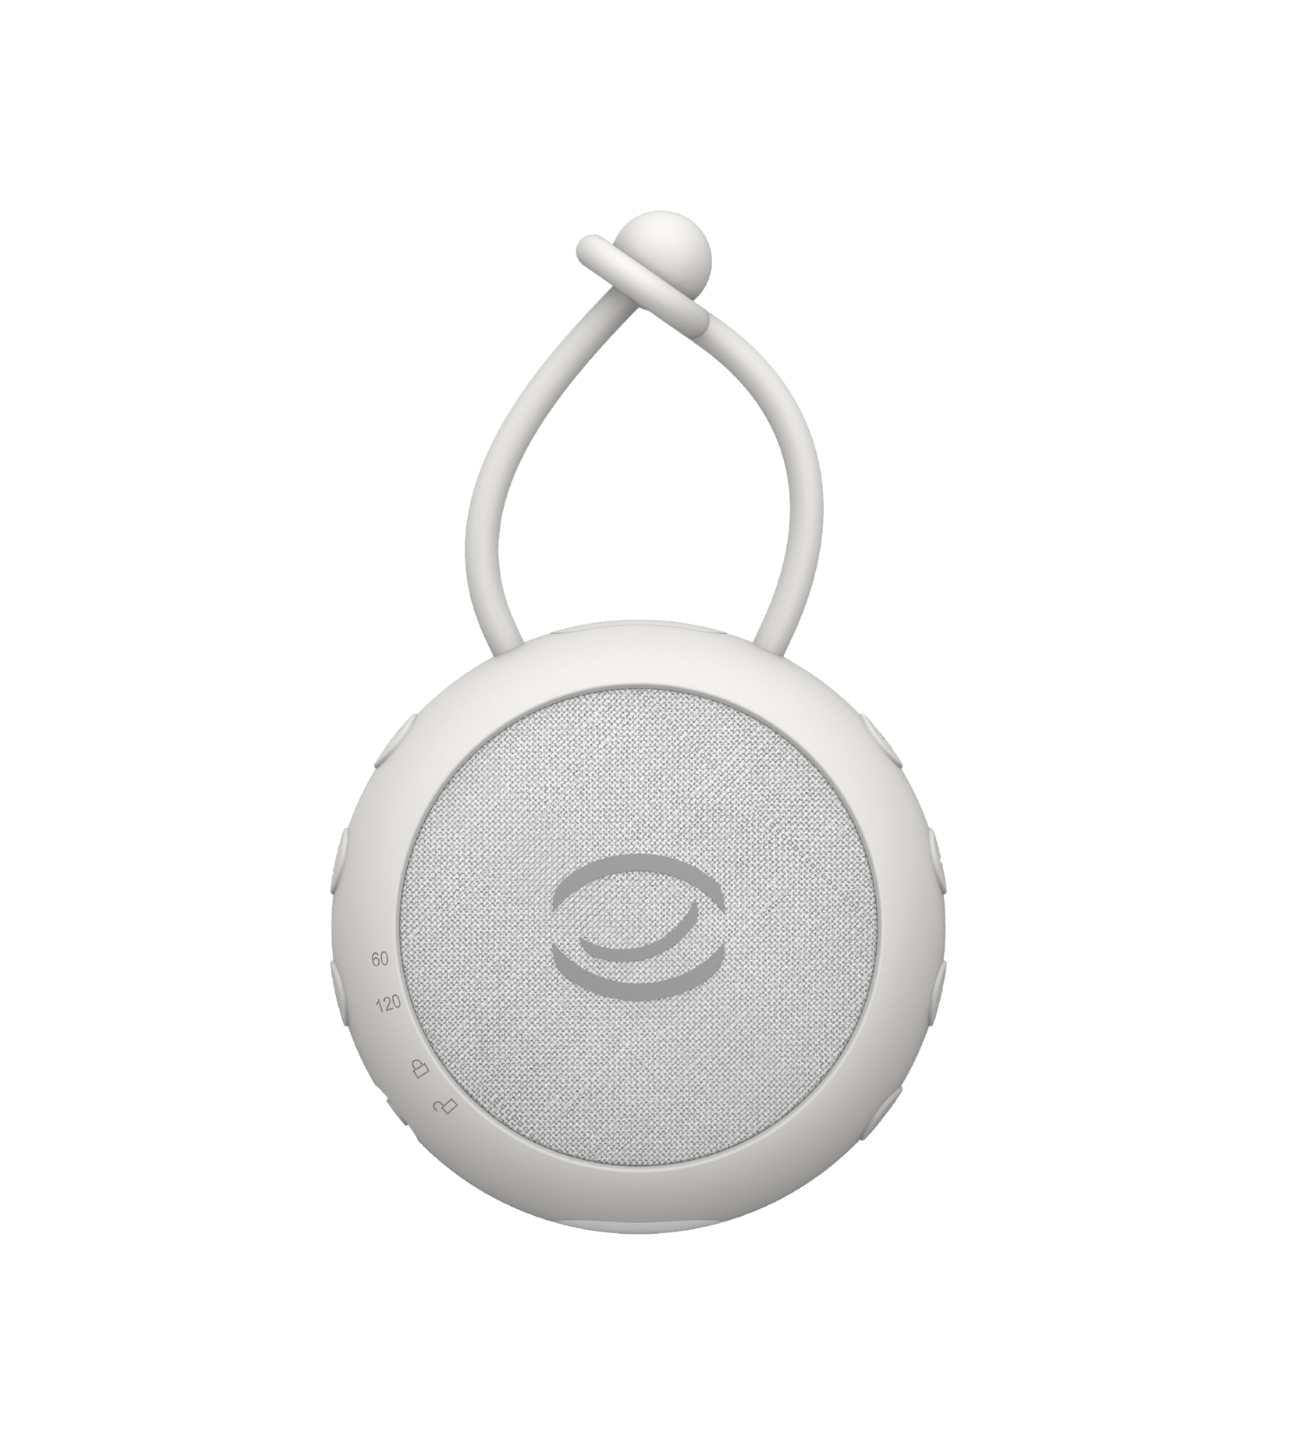 <tc>Budizzz Smart Sleep Aid with Cry Sensor - 6 Different White Noises</tc>